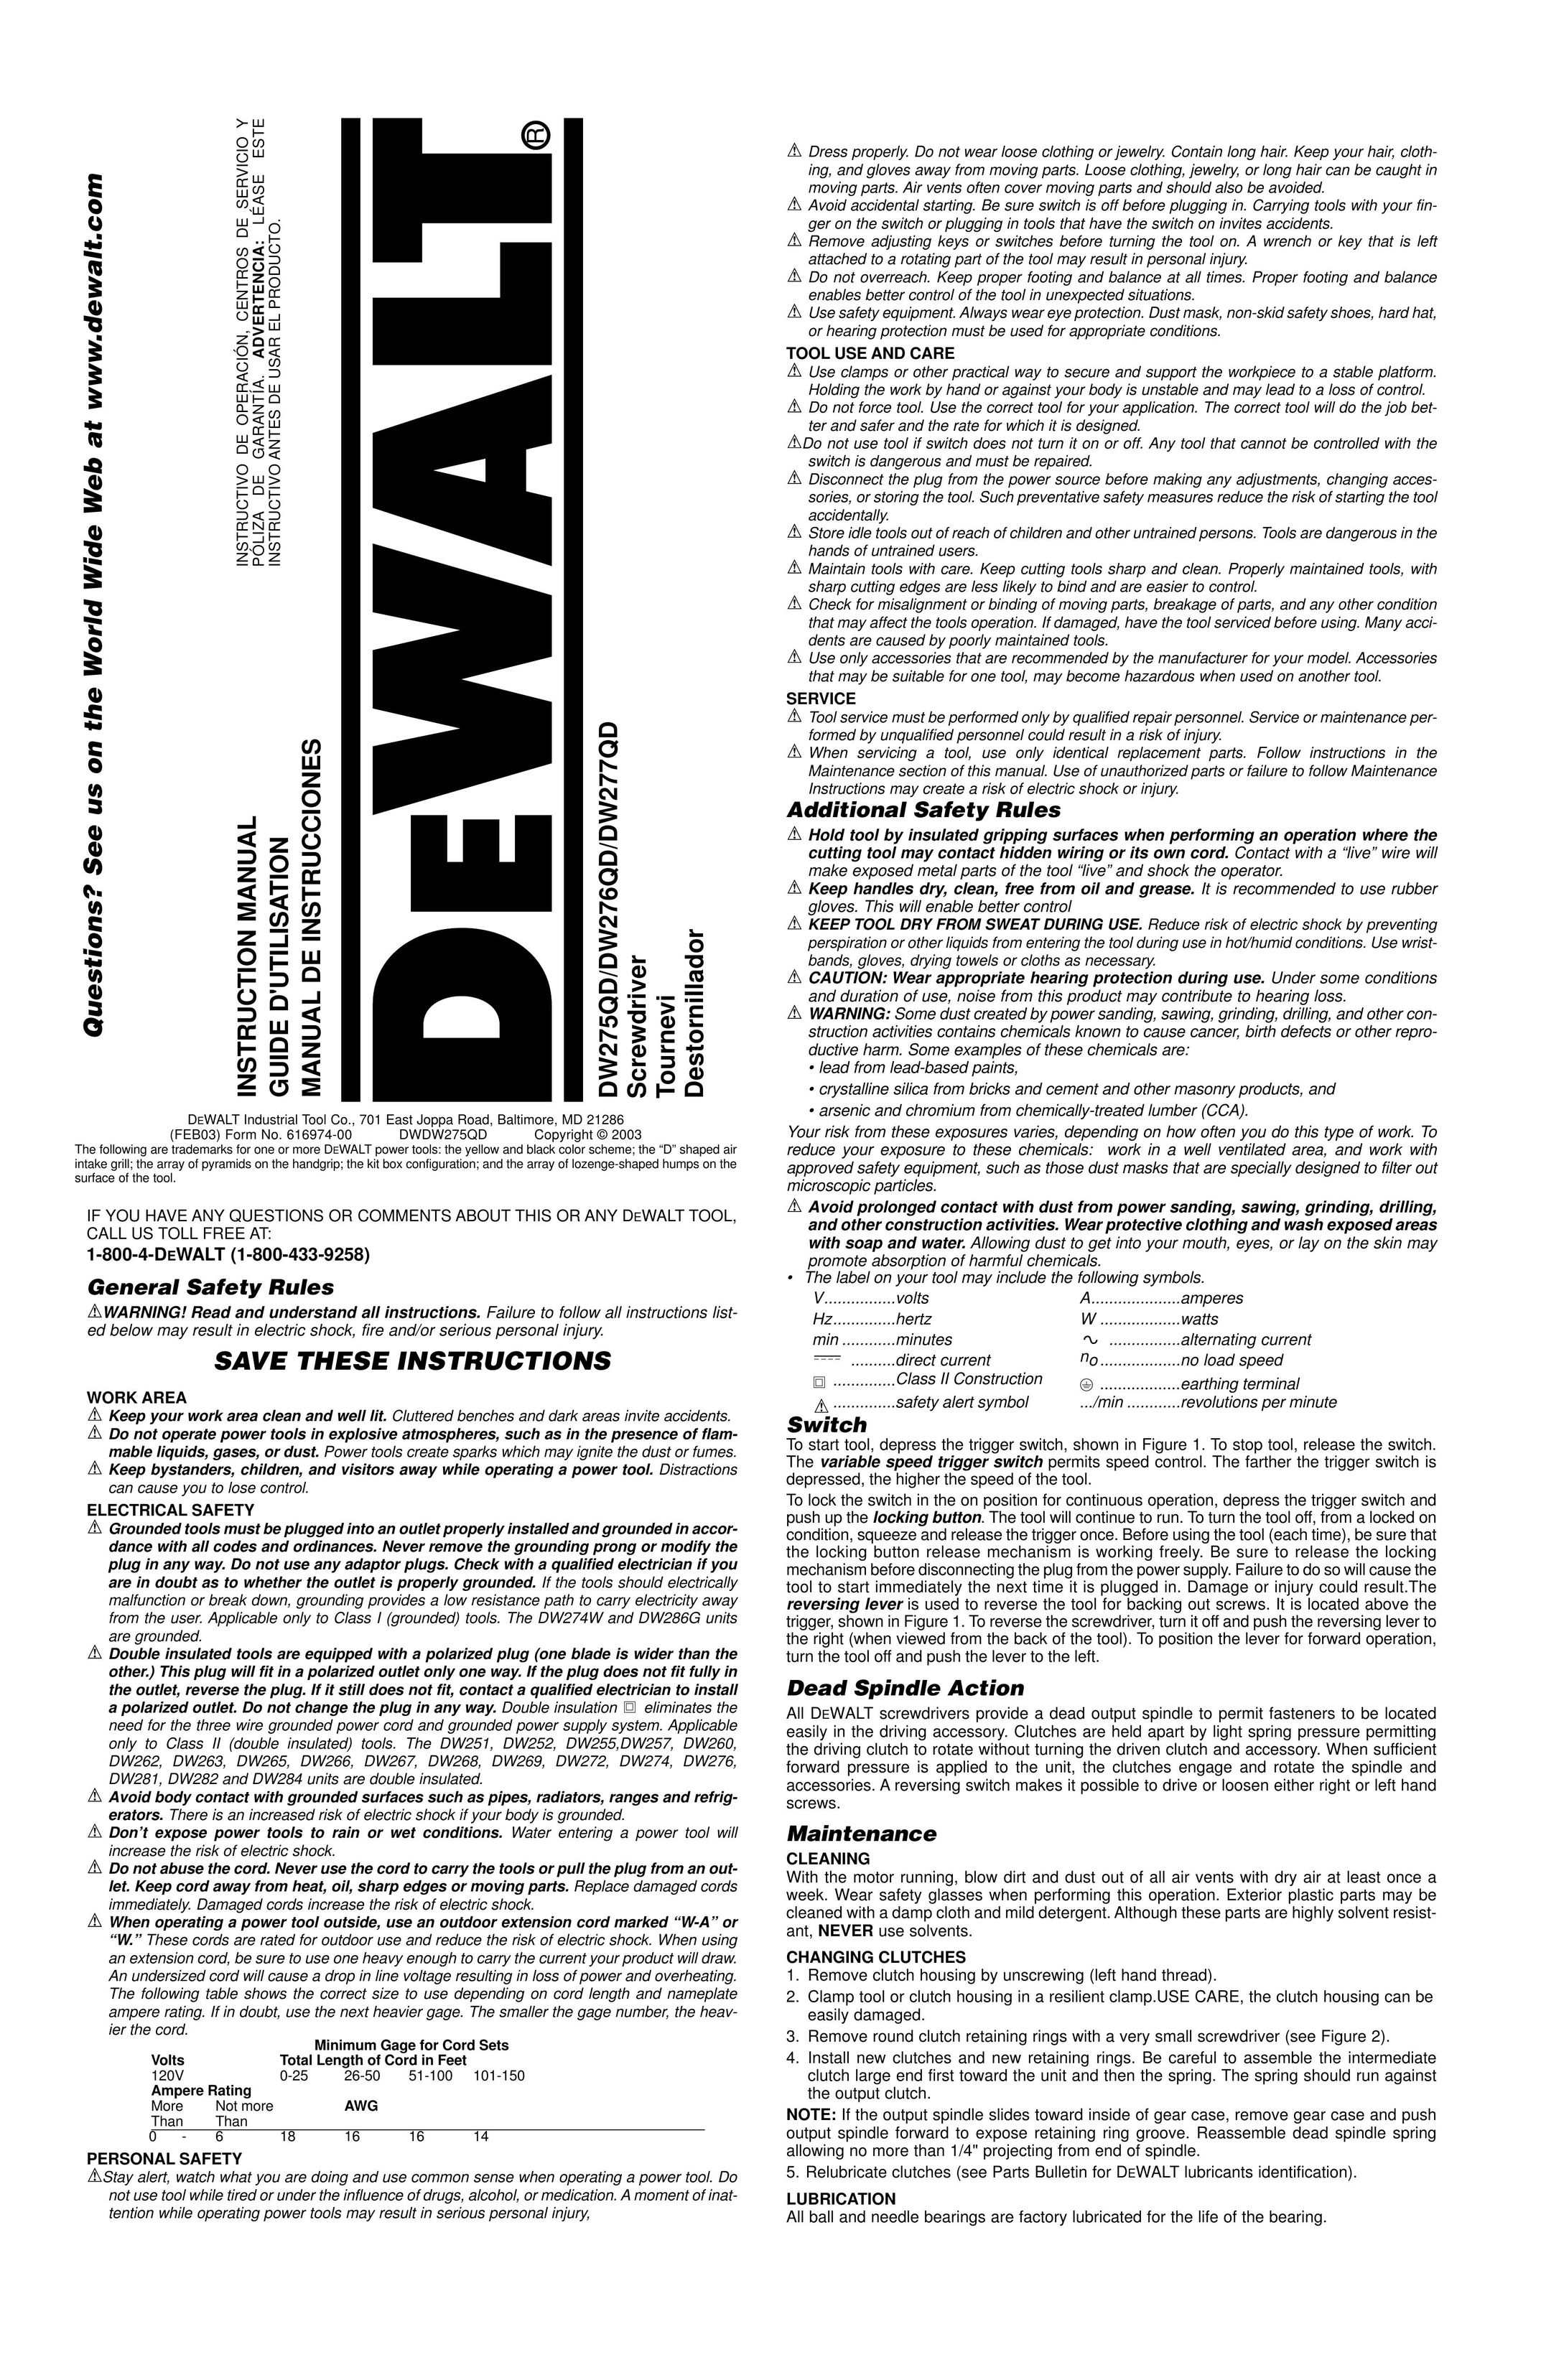 DeWalt DW275QD Power Screwdriver User Manual